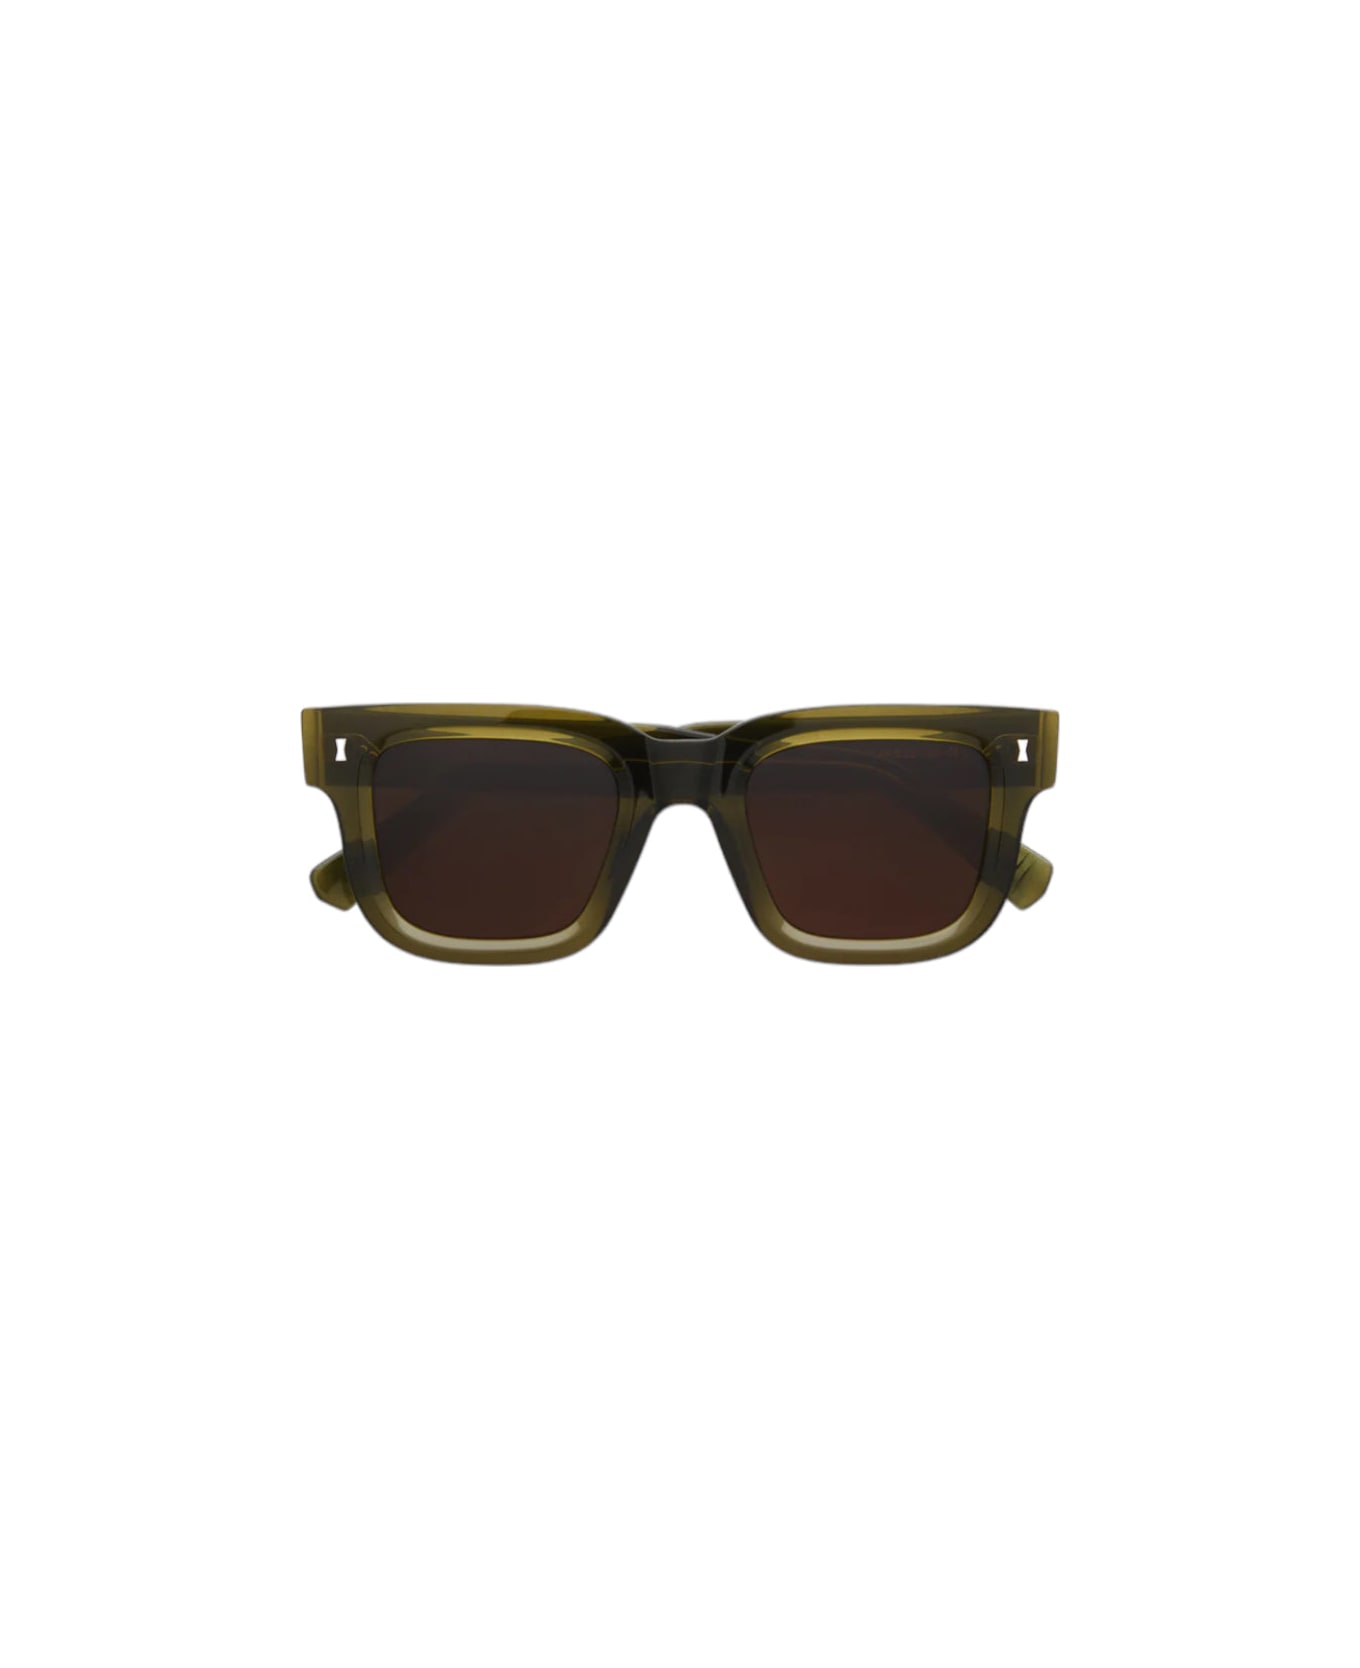 Cubitts Plender - Crystal Green Sunglasses サングラス